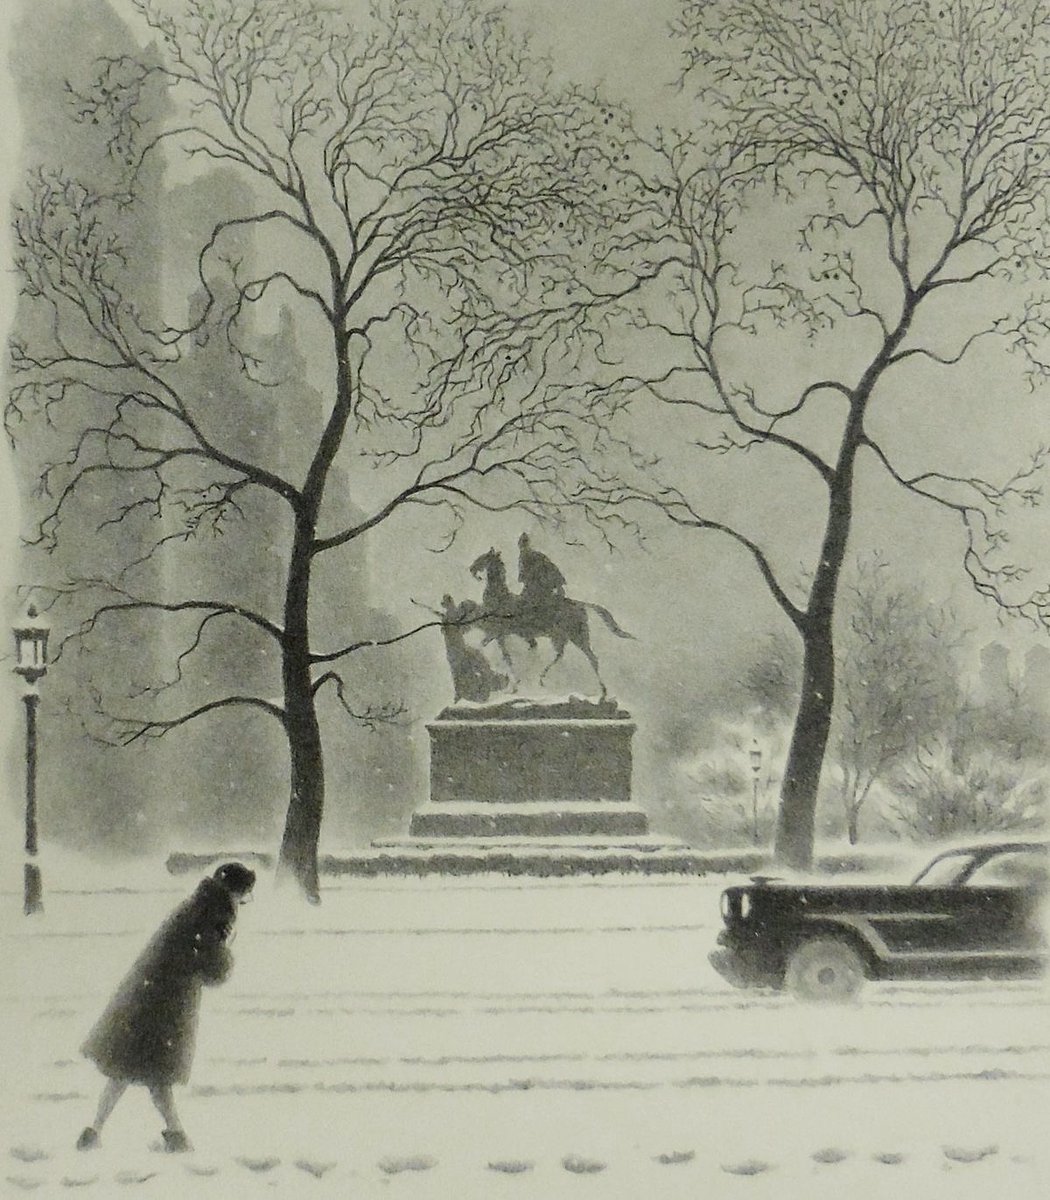 Central Park, Snow’ by Ellison Hoover, c. 1935.